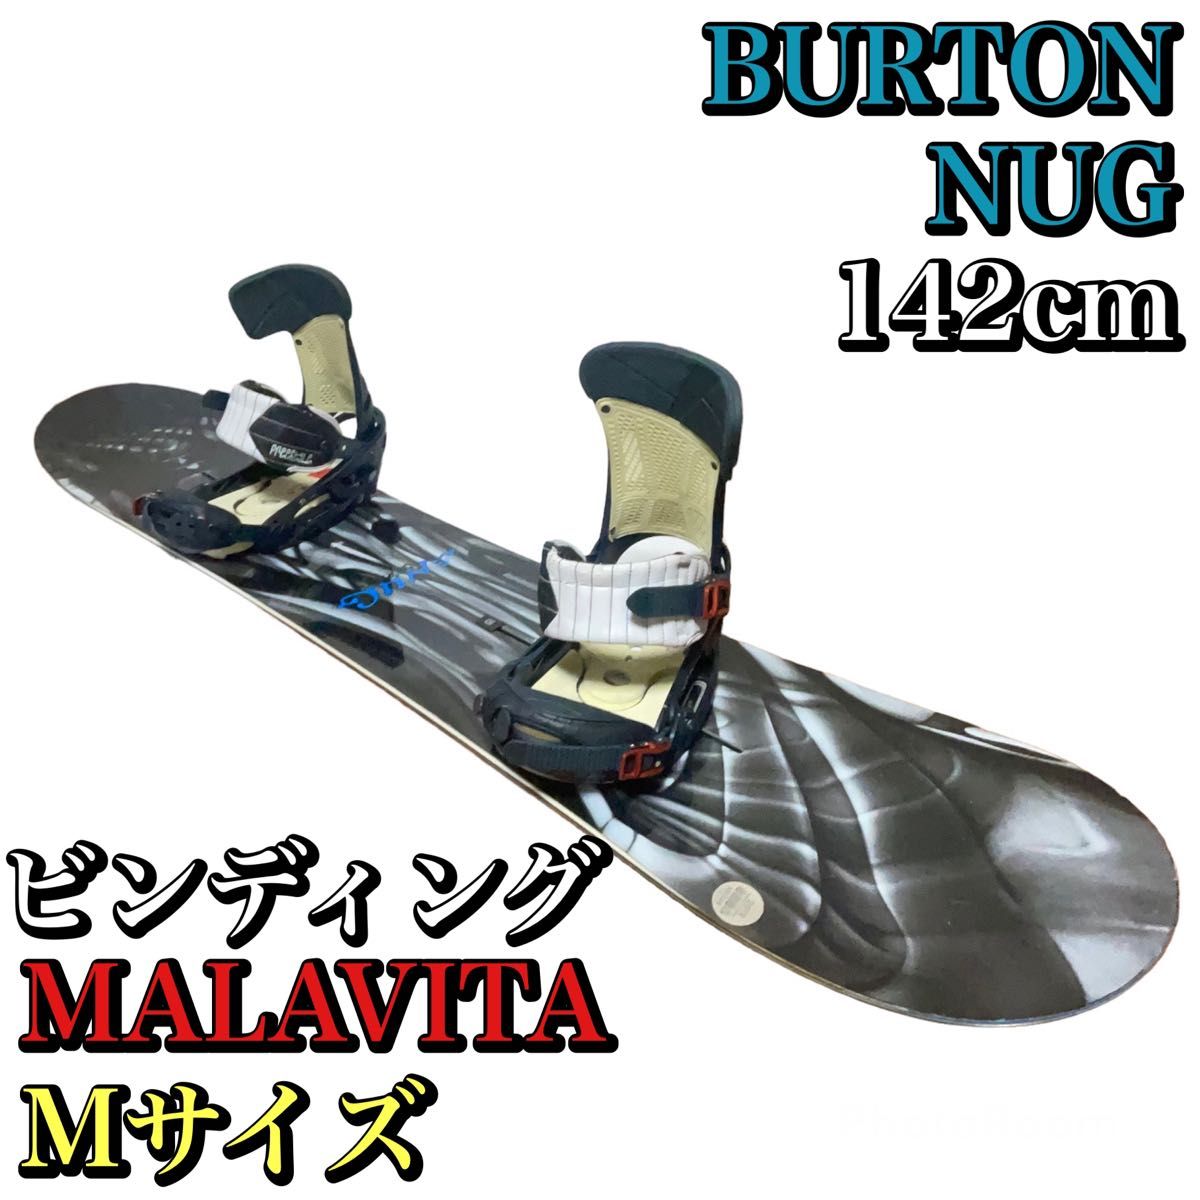 BURTON NUG 142cm × MALAVITA Mサイズ スノーボード スノーボード www